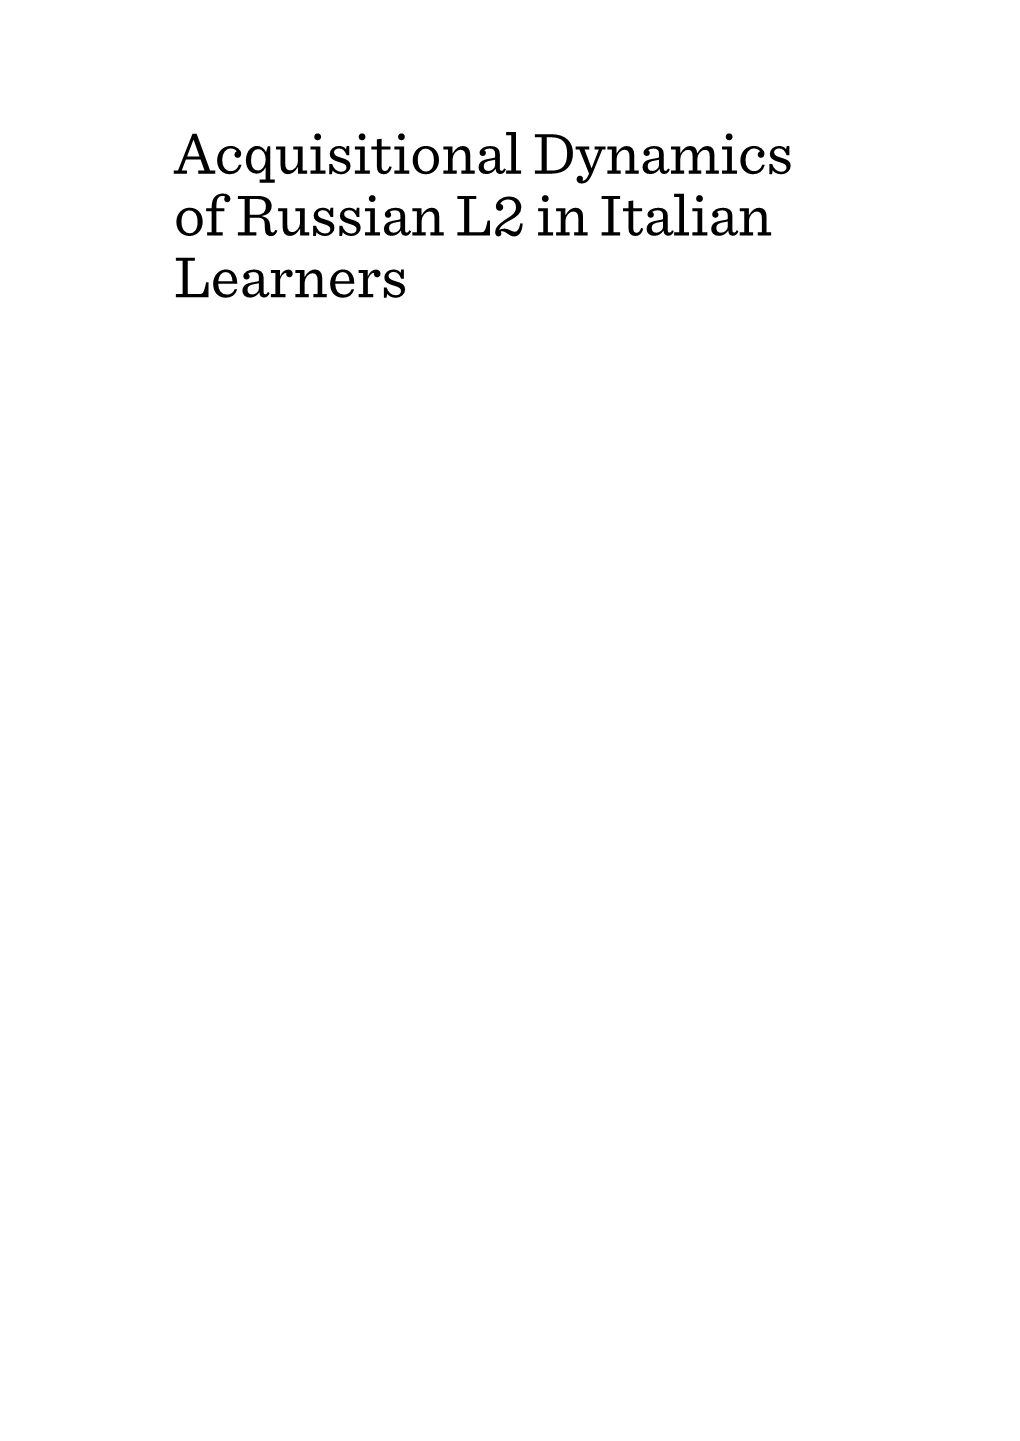 Acquisitional Dynamics of Russian L2 in Italian Learners